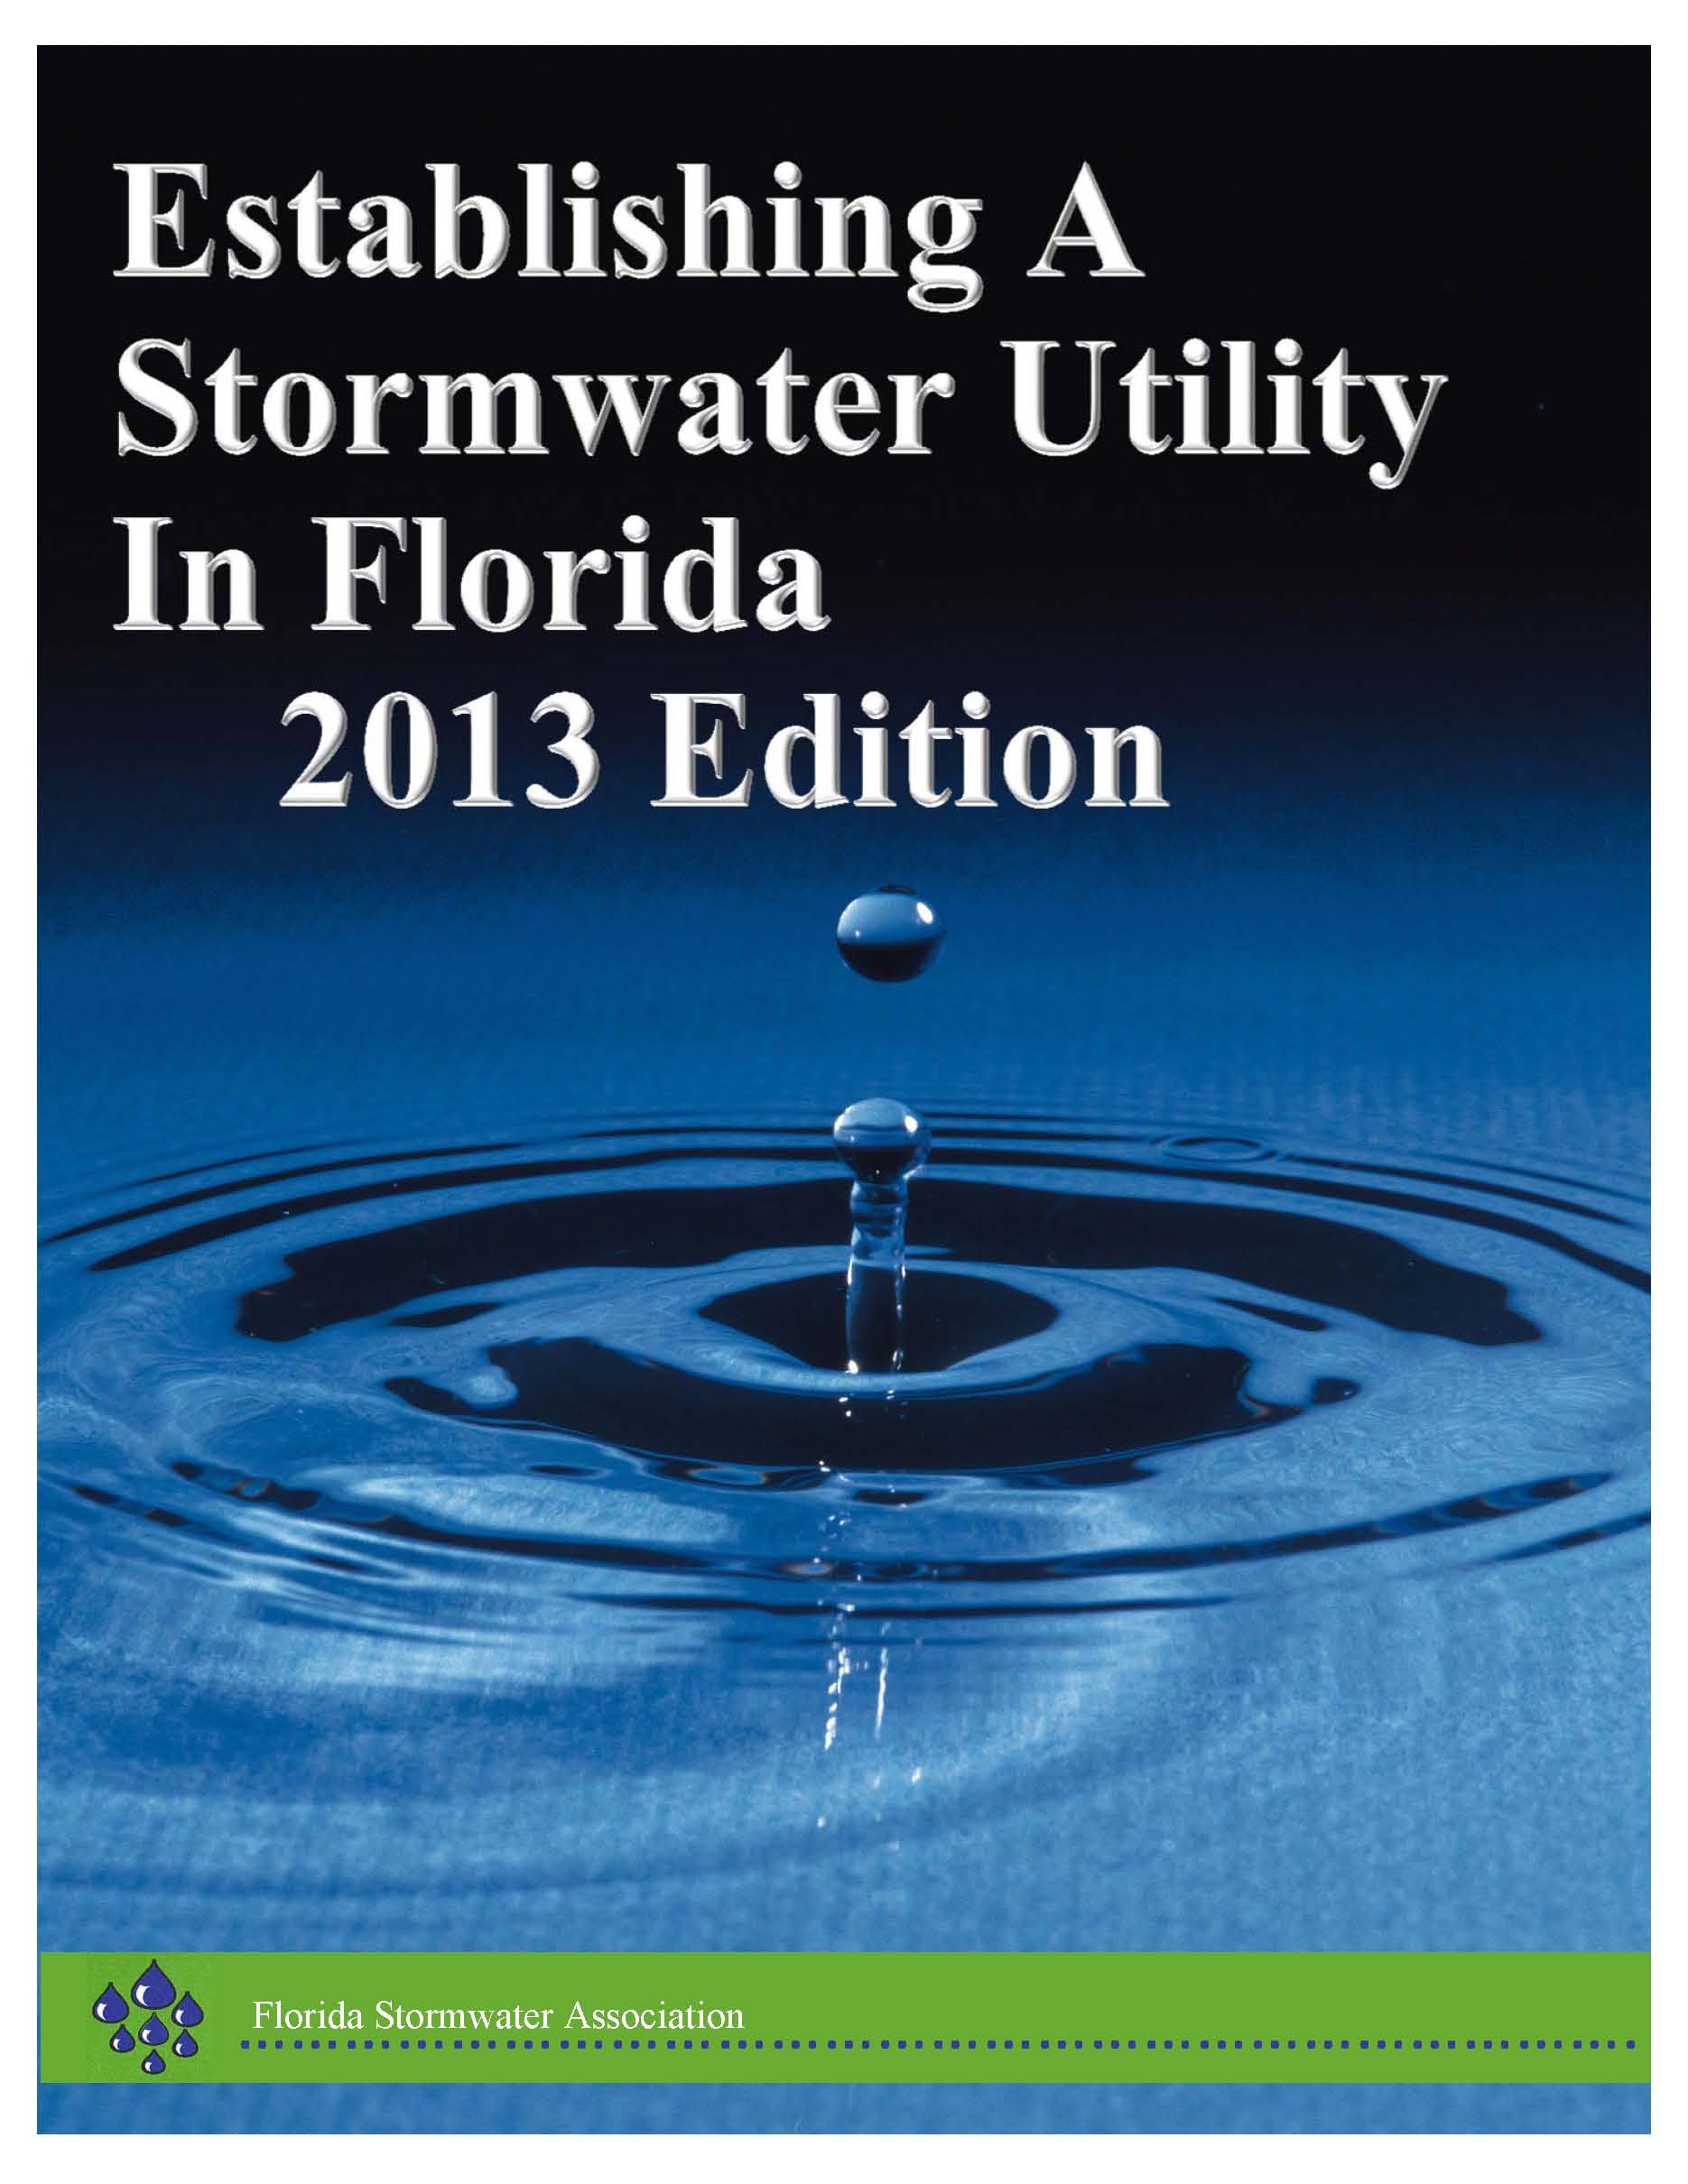 Manual for Establishing Stormwater Utilities in Florida